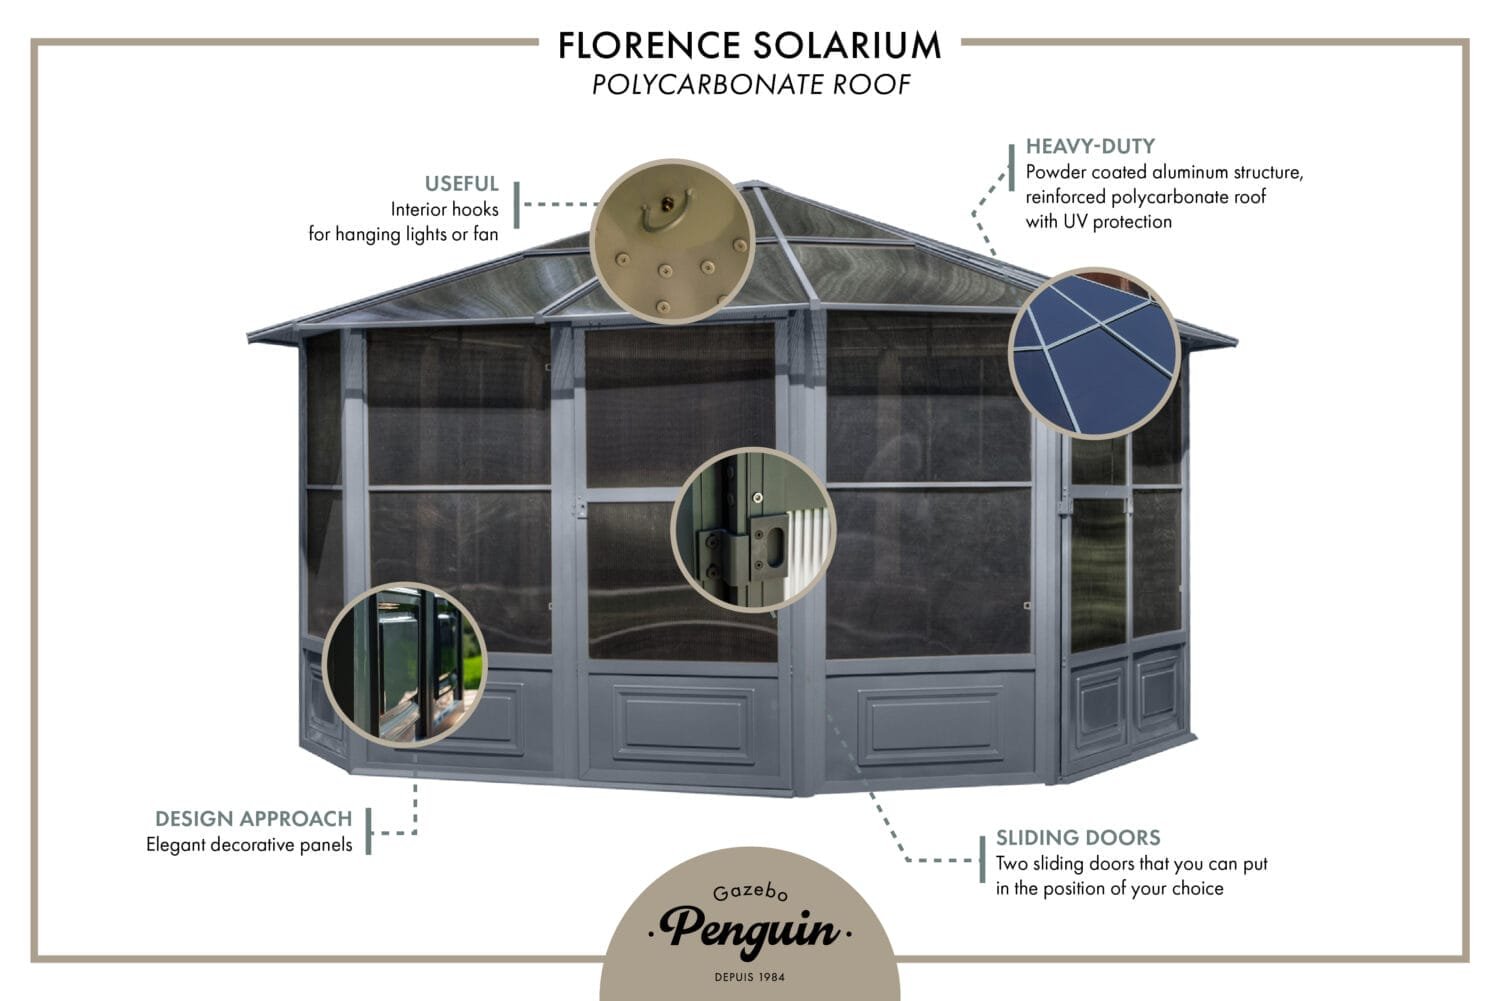 Florence Solarium 12x18 Polycarbonate Roof 41218 12 060051019031 (8)